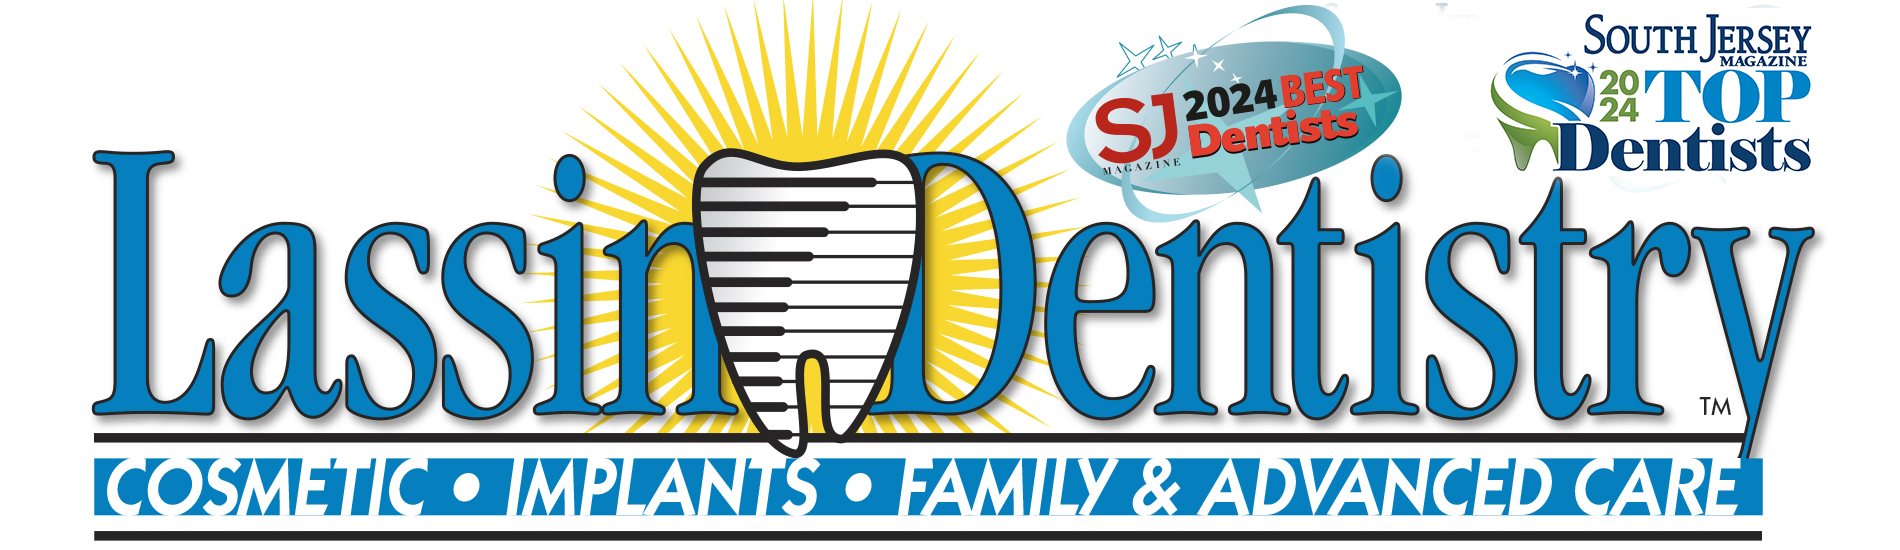 Lassin Dentistry Web-Slide #4